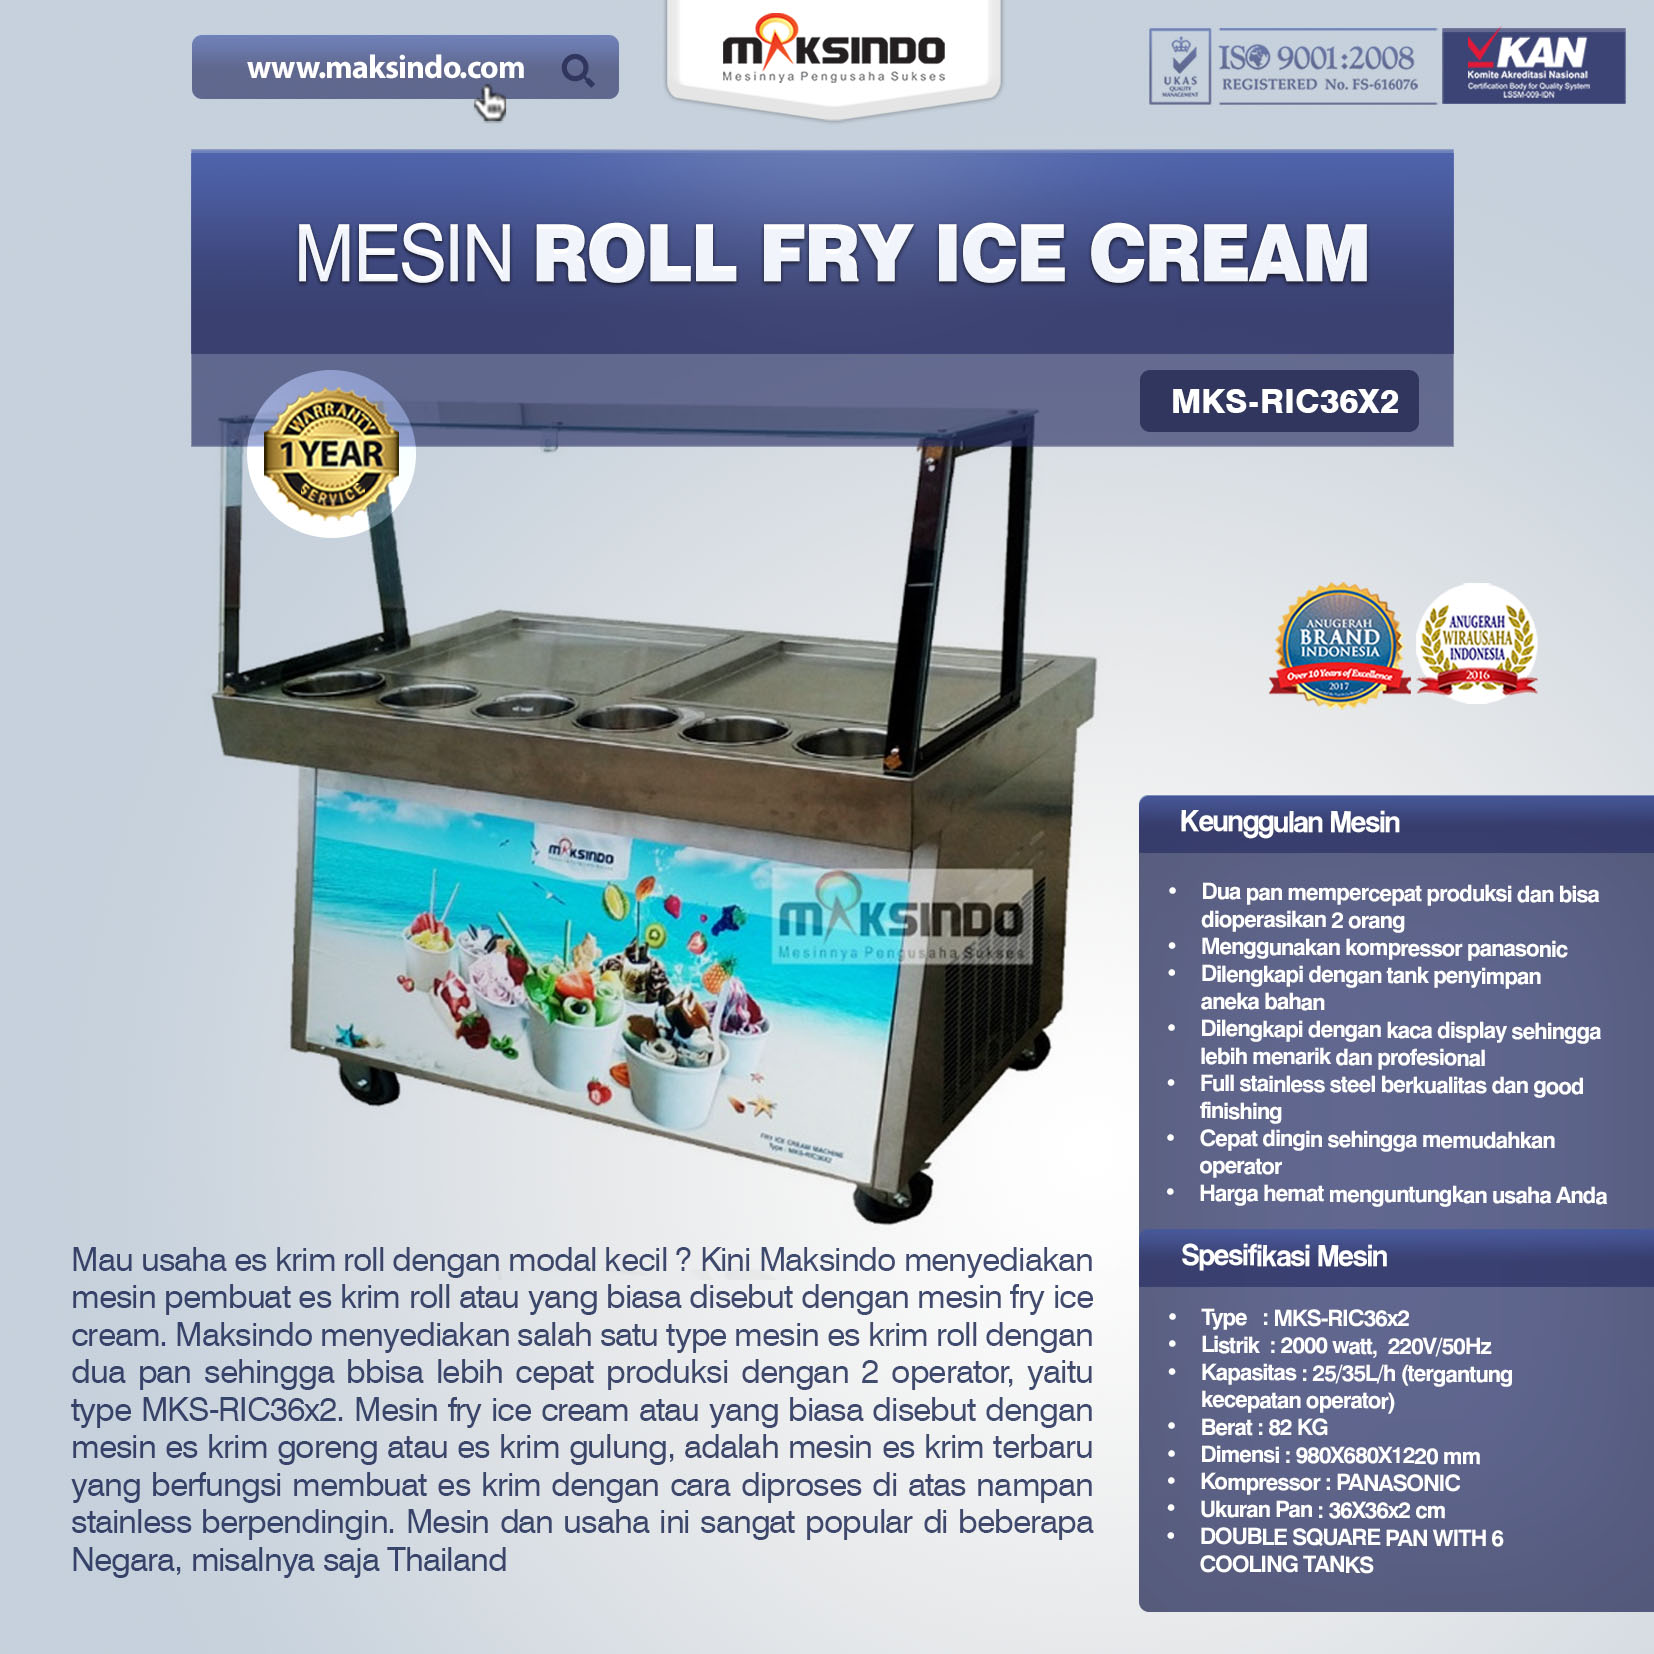 Jual Mesin Roll Fry Ice Cream RIC36x2 di Palembang